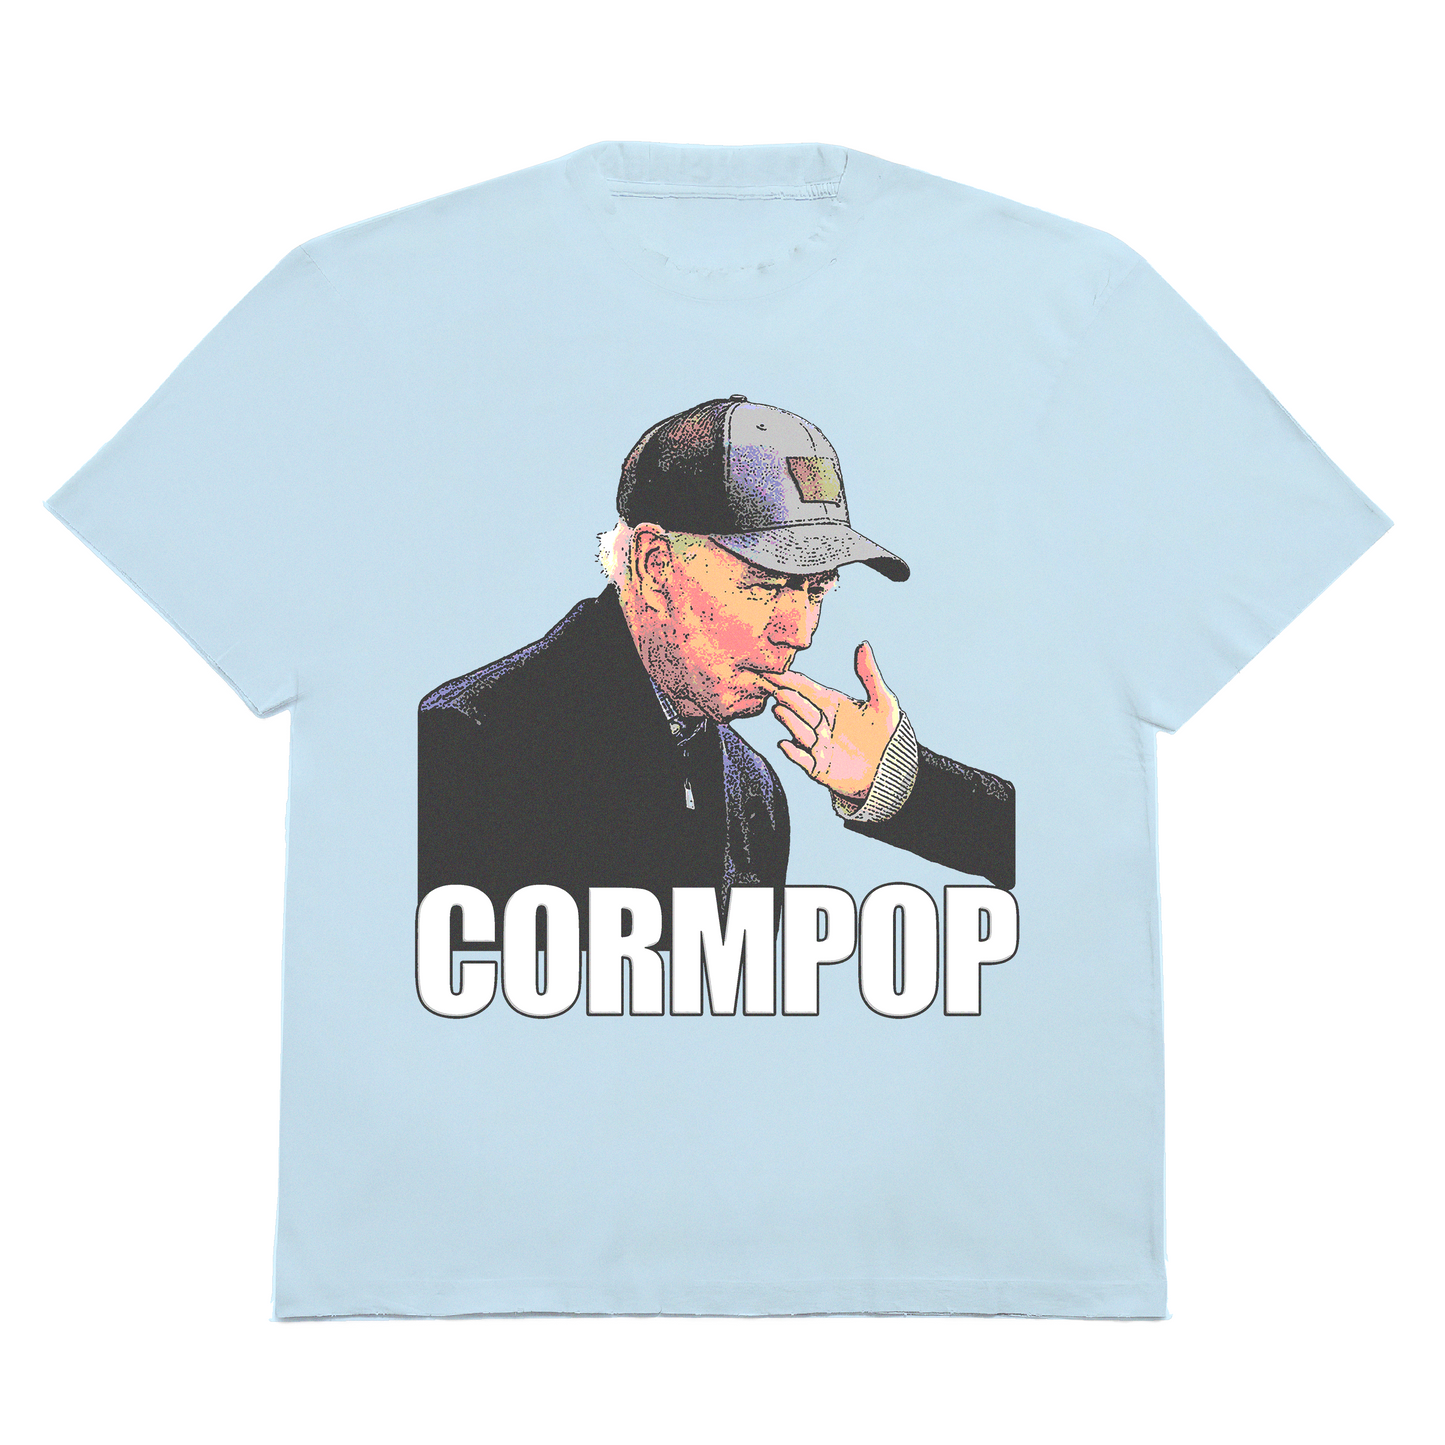 Fashion Politik Joe Biden 2024 "Cormpop" Finger Bite T-Shirt - Powder Blue, White, Black - 100% Cotton Premium Comfort Colors